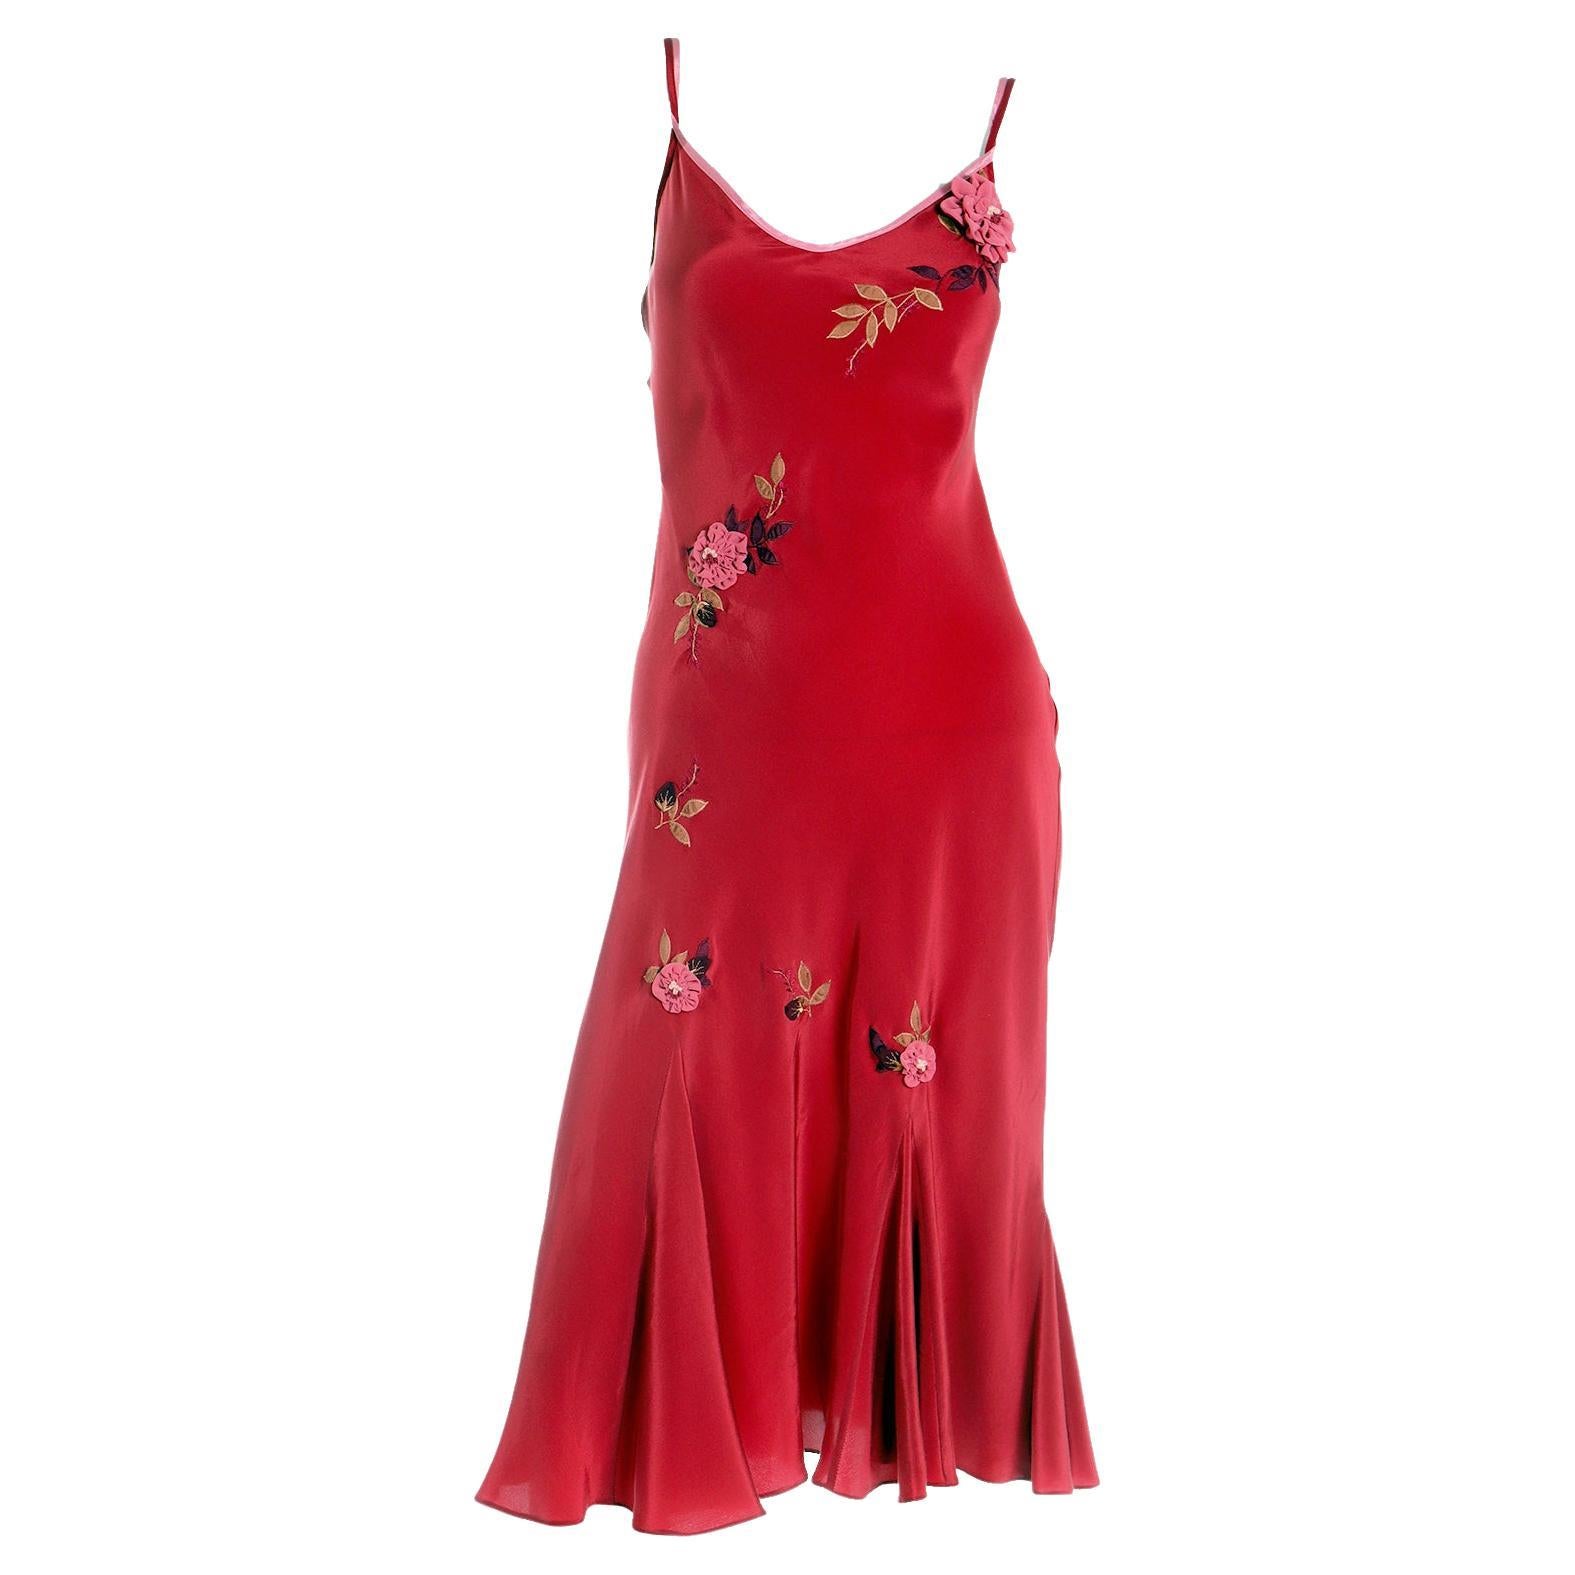 Betsey Johnson Vintage Red Silk Bias Slip Dress w Flower Applique & Embroidery